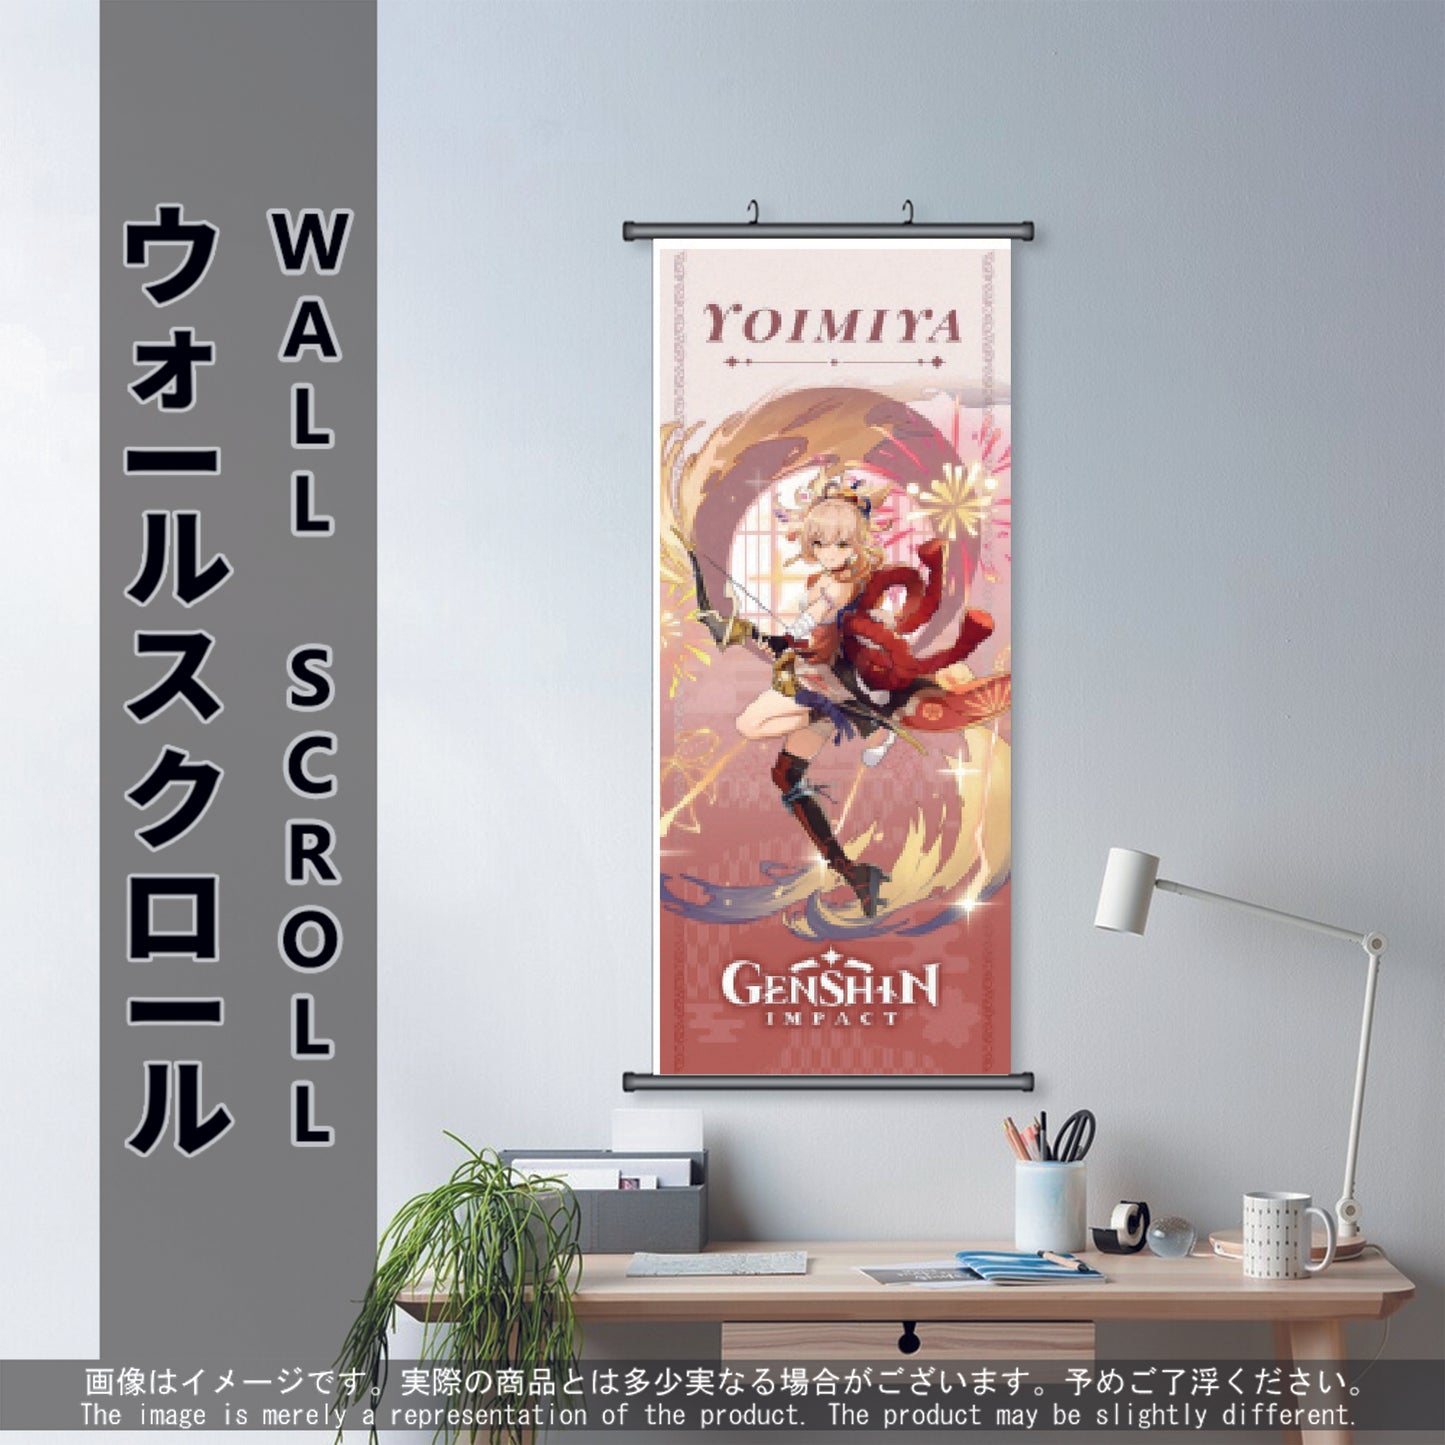 (GSN-PYRO-09) YOIMIYA Genshin Impact Anime Wall Scroll